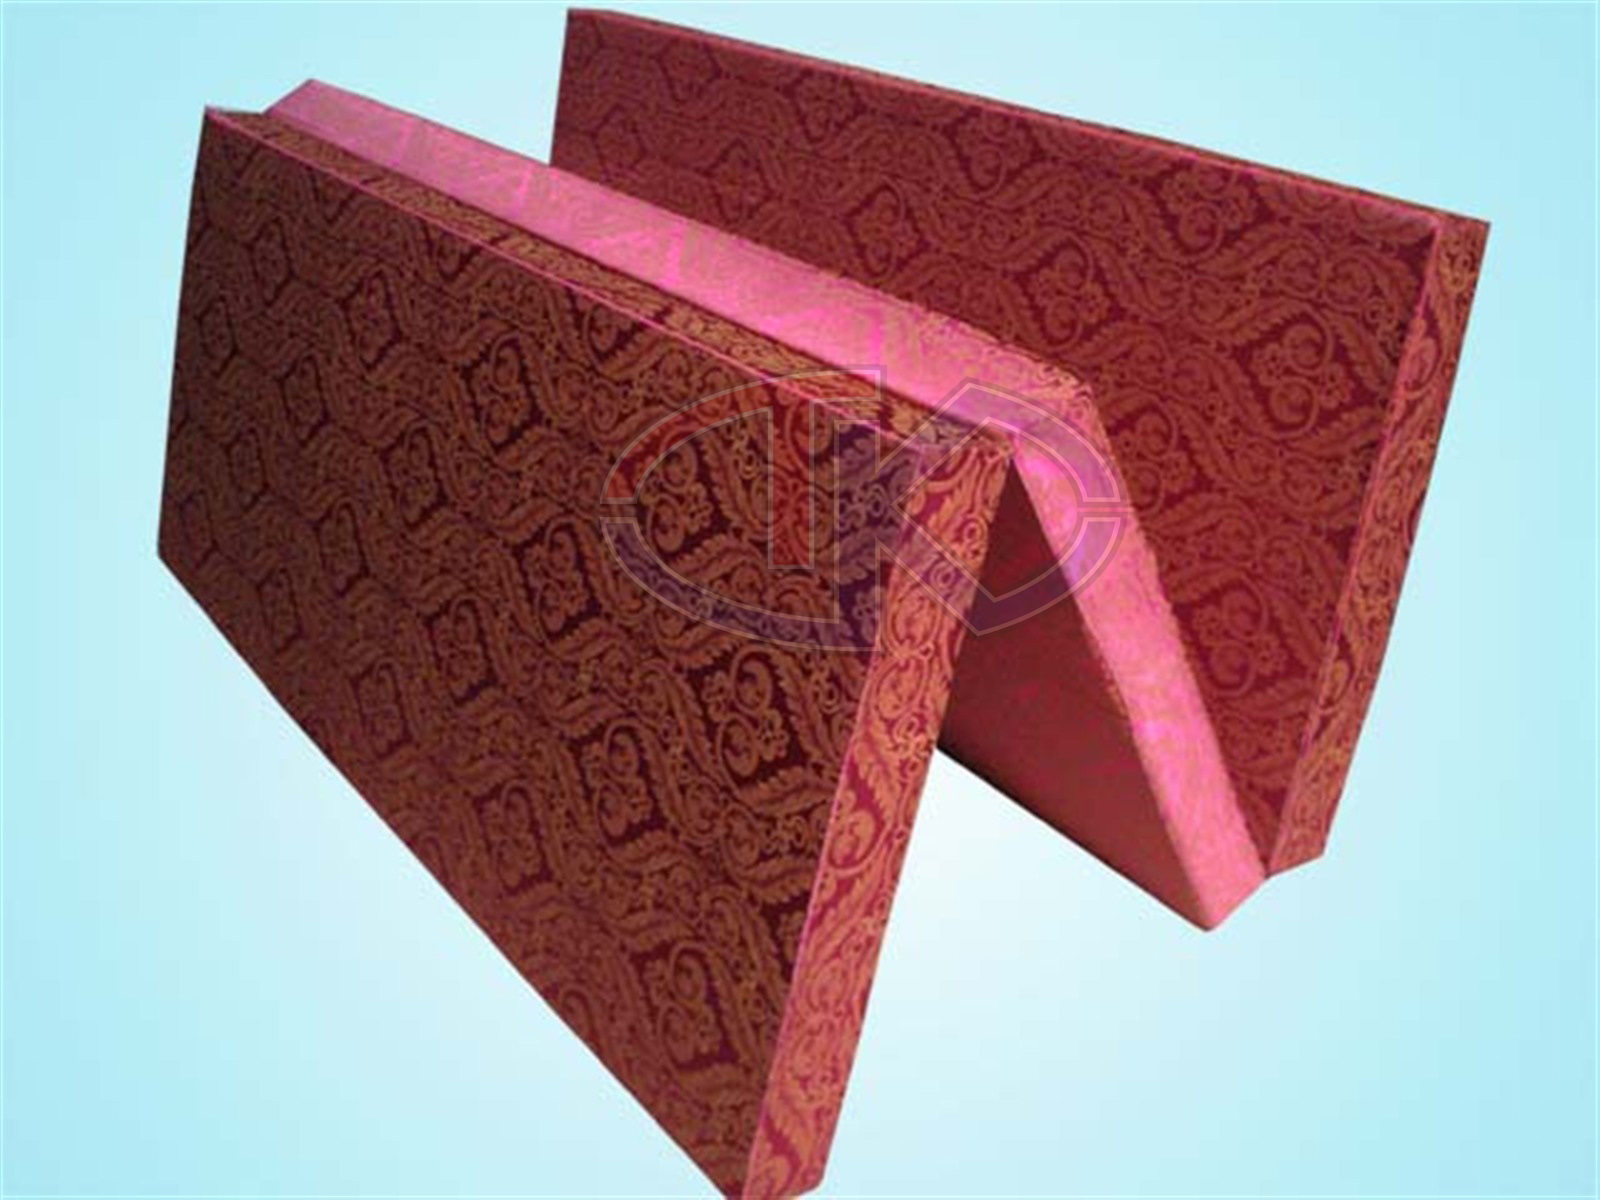 foam mattress manufacturers in noida